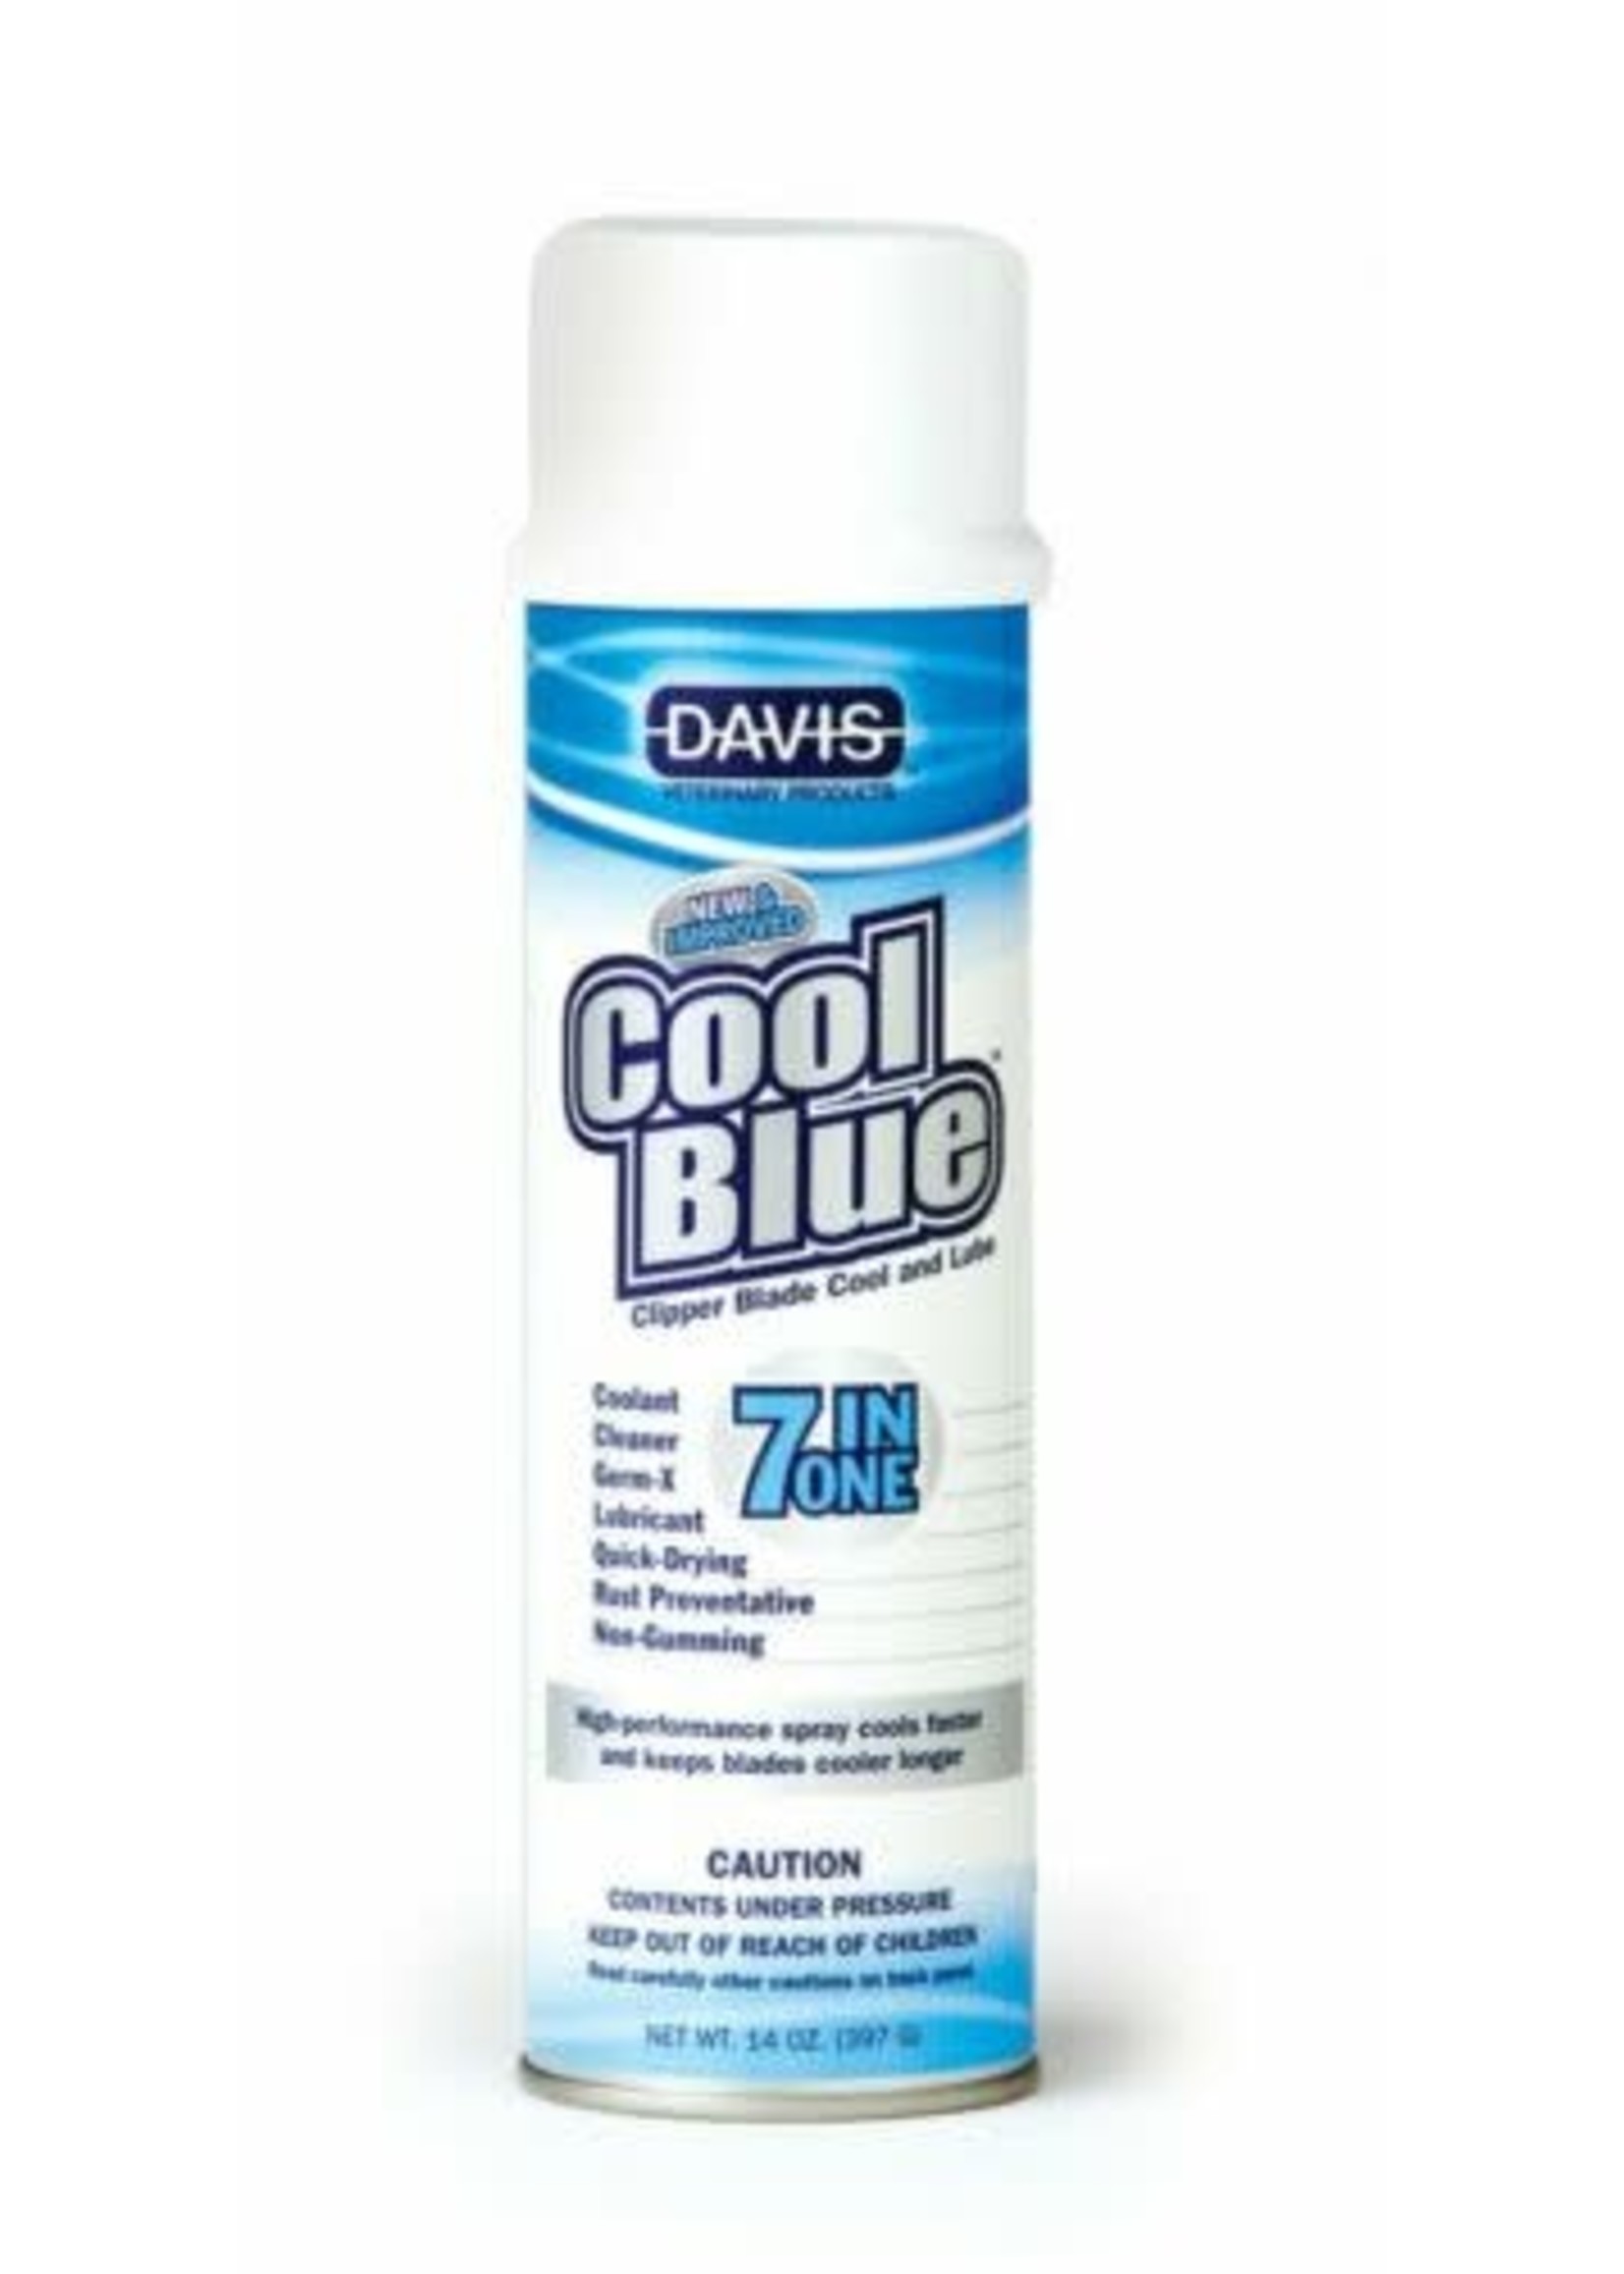 Davis Davis Cool Blue Clipper Blade Cool & Lube 7 in 1 14oz